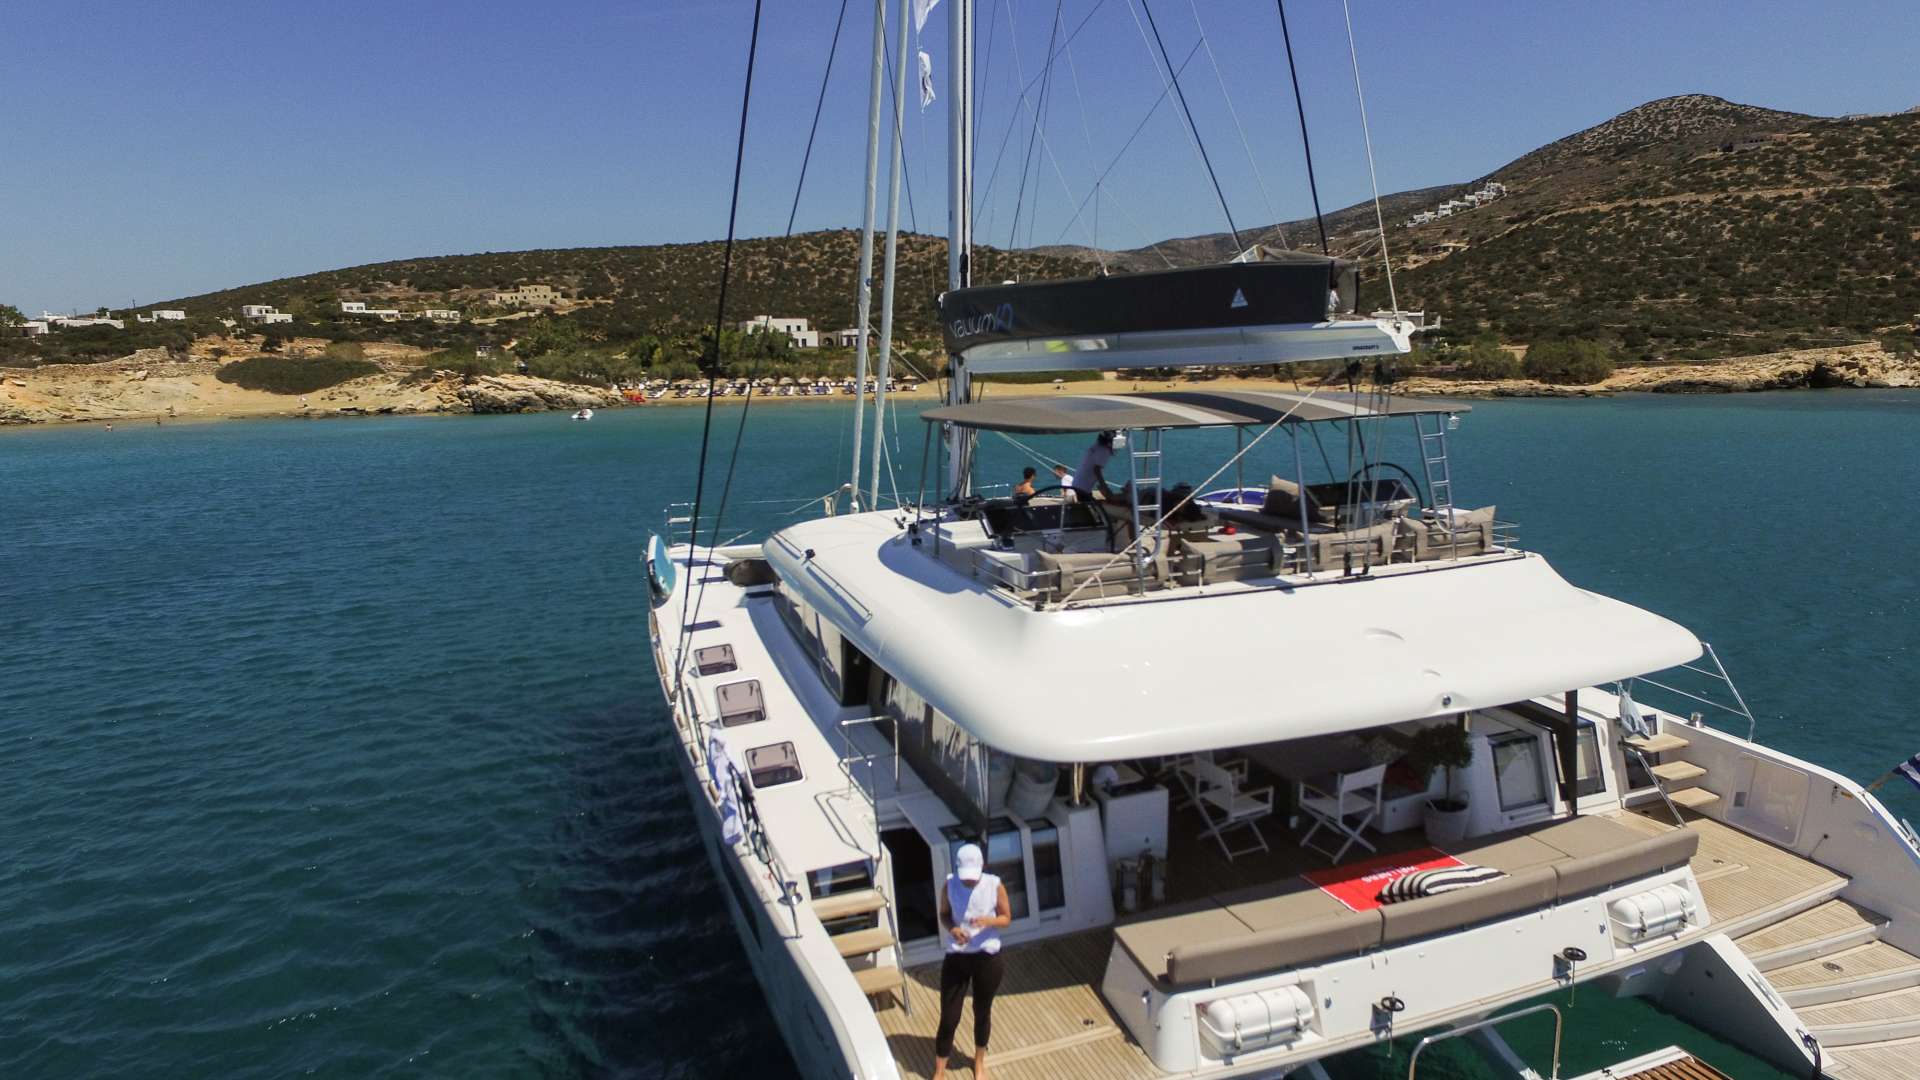 valium62 - Yacht Charter Kassandra & Boat hire in Greece 1